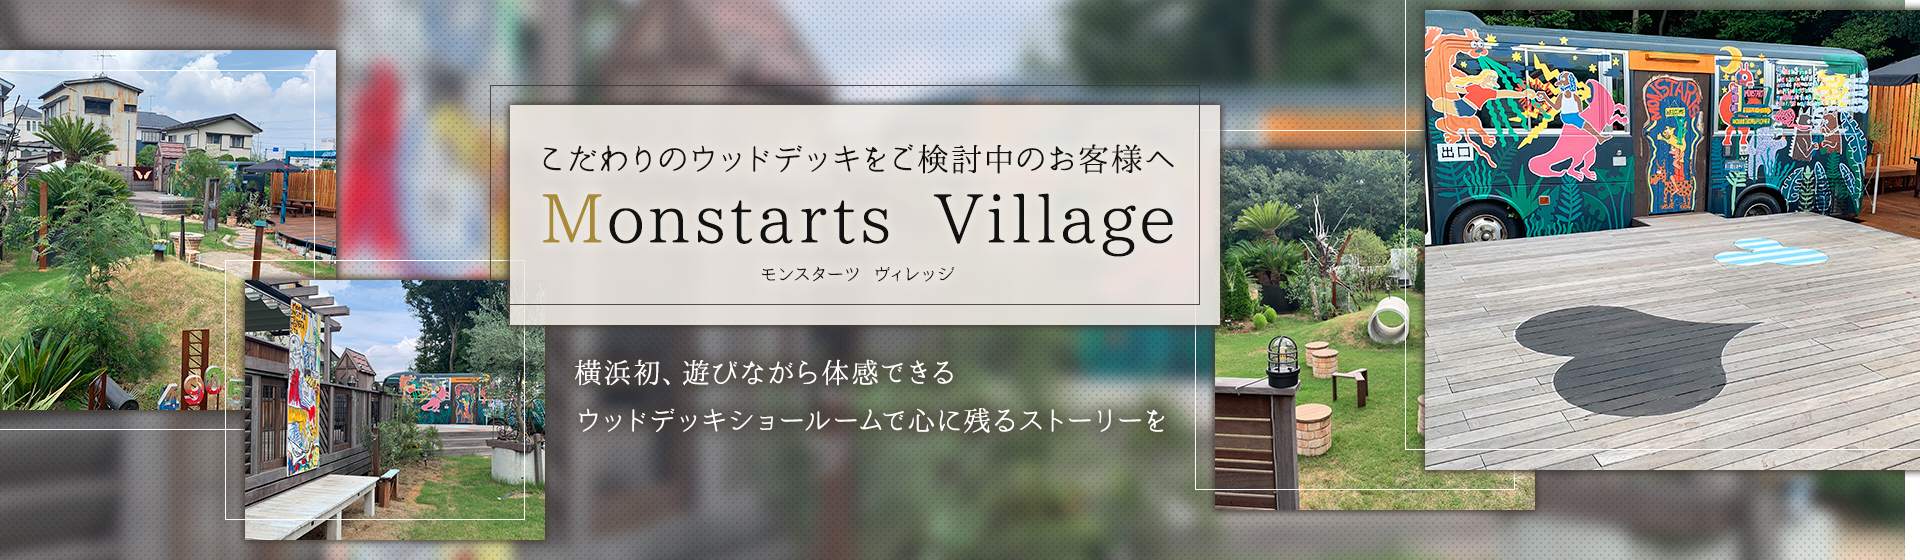 monstarts village